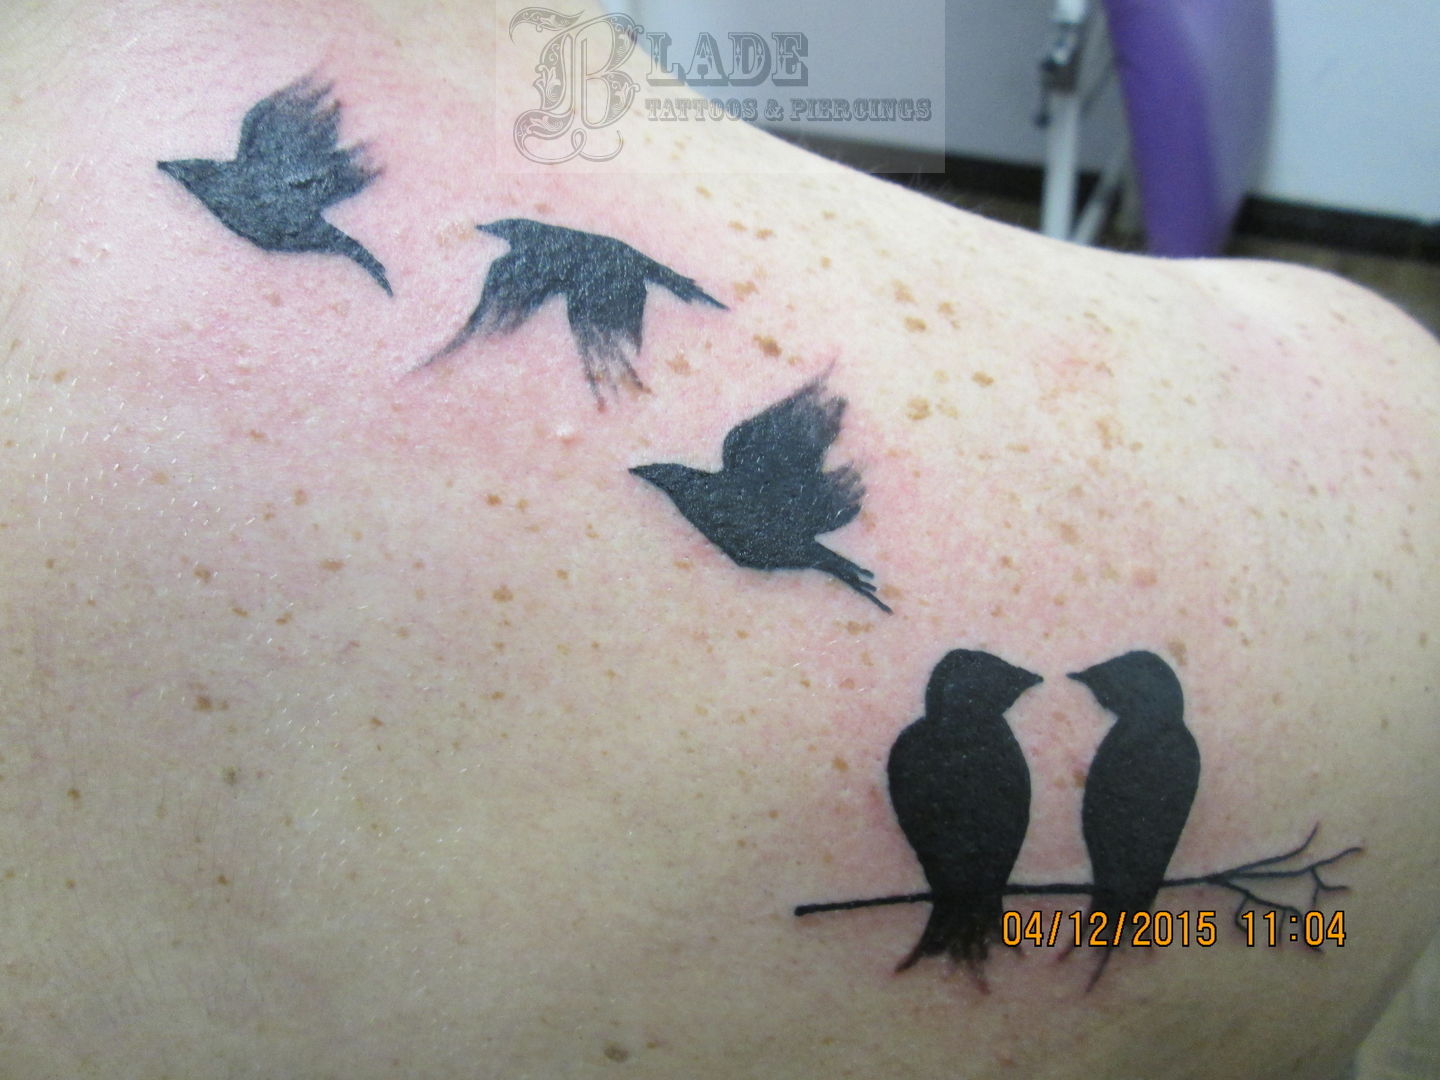 Bird Tattoos Interpreted: What Various Birds Mean & Represent - TatRing